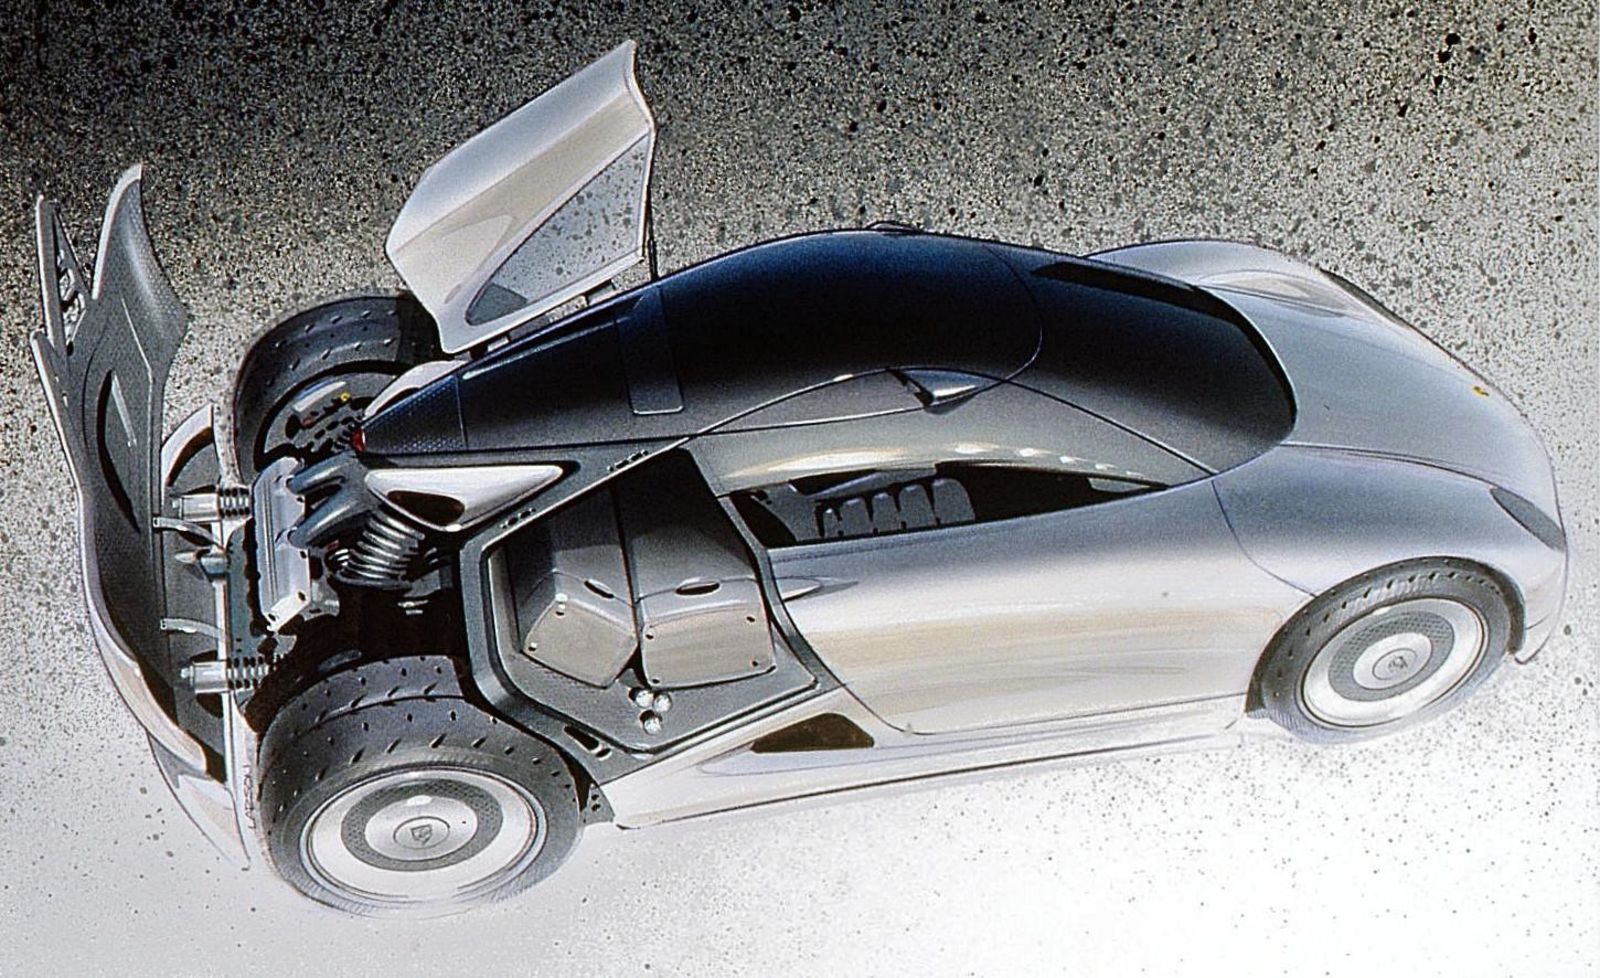 Illustration for article titled Porsche Design Study 1991